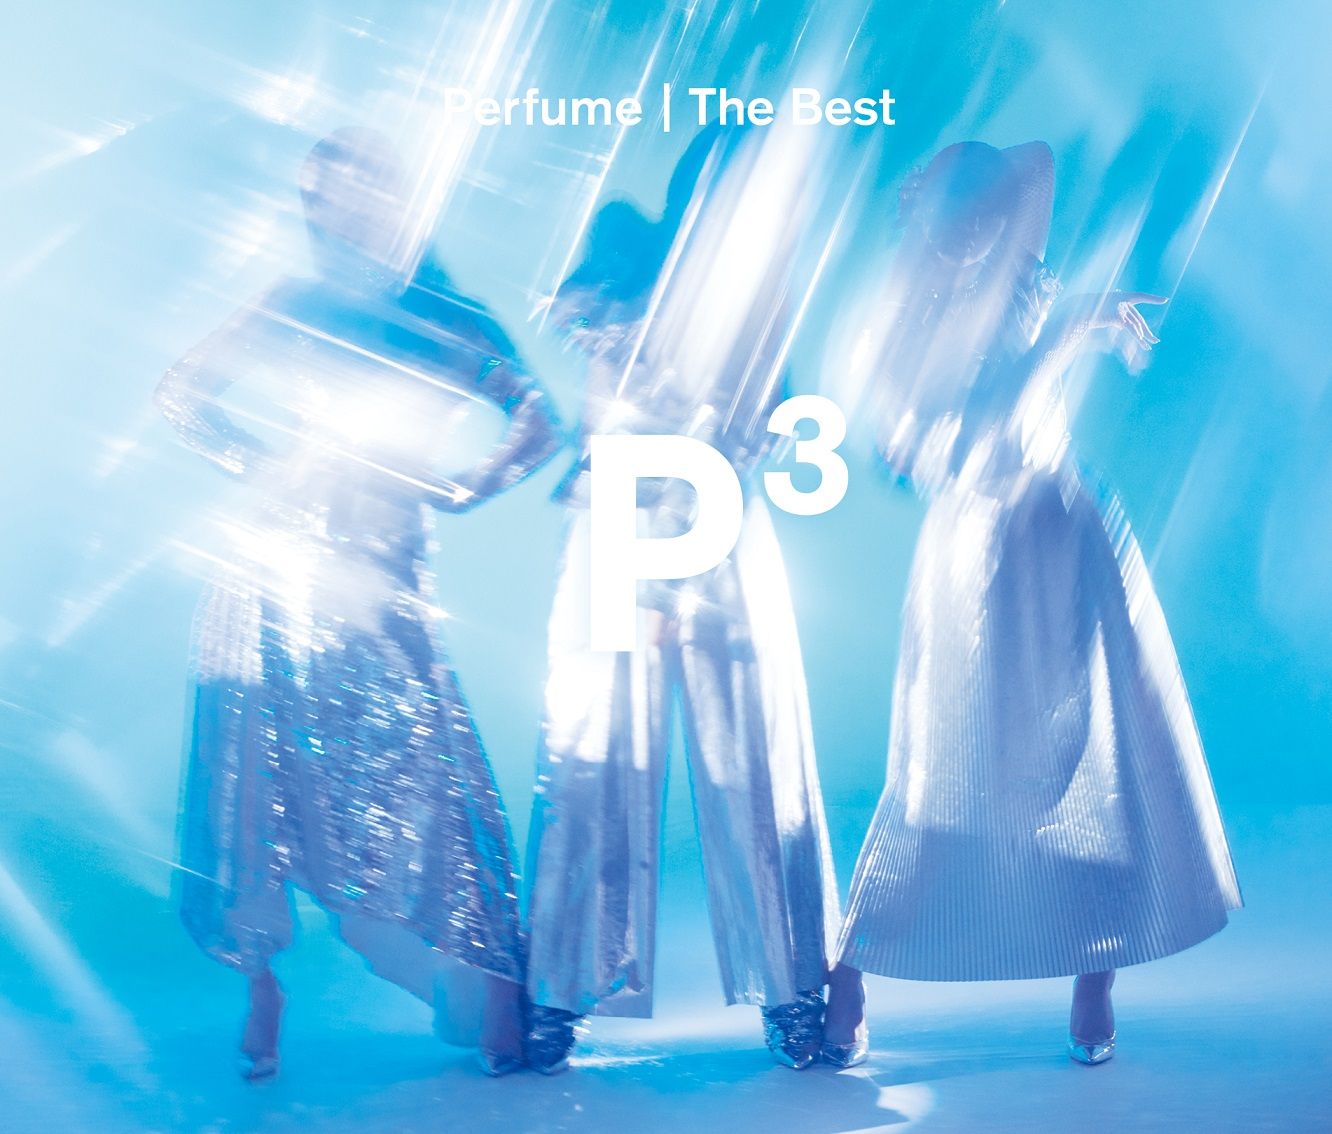 Perfume The Best ”P Cubed” (通常盤 3CD) [ Perfume ]